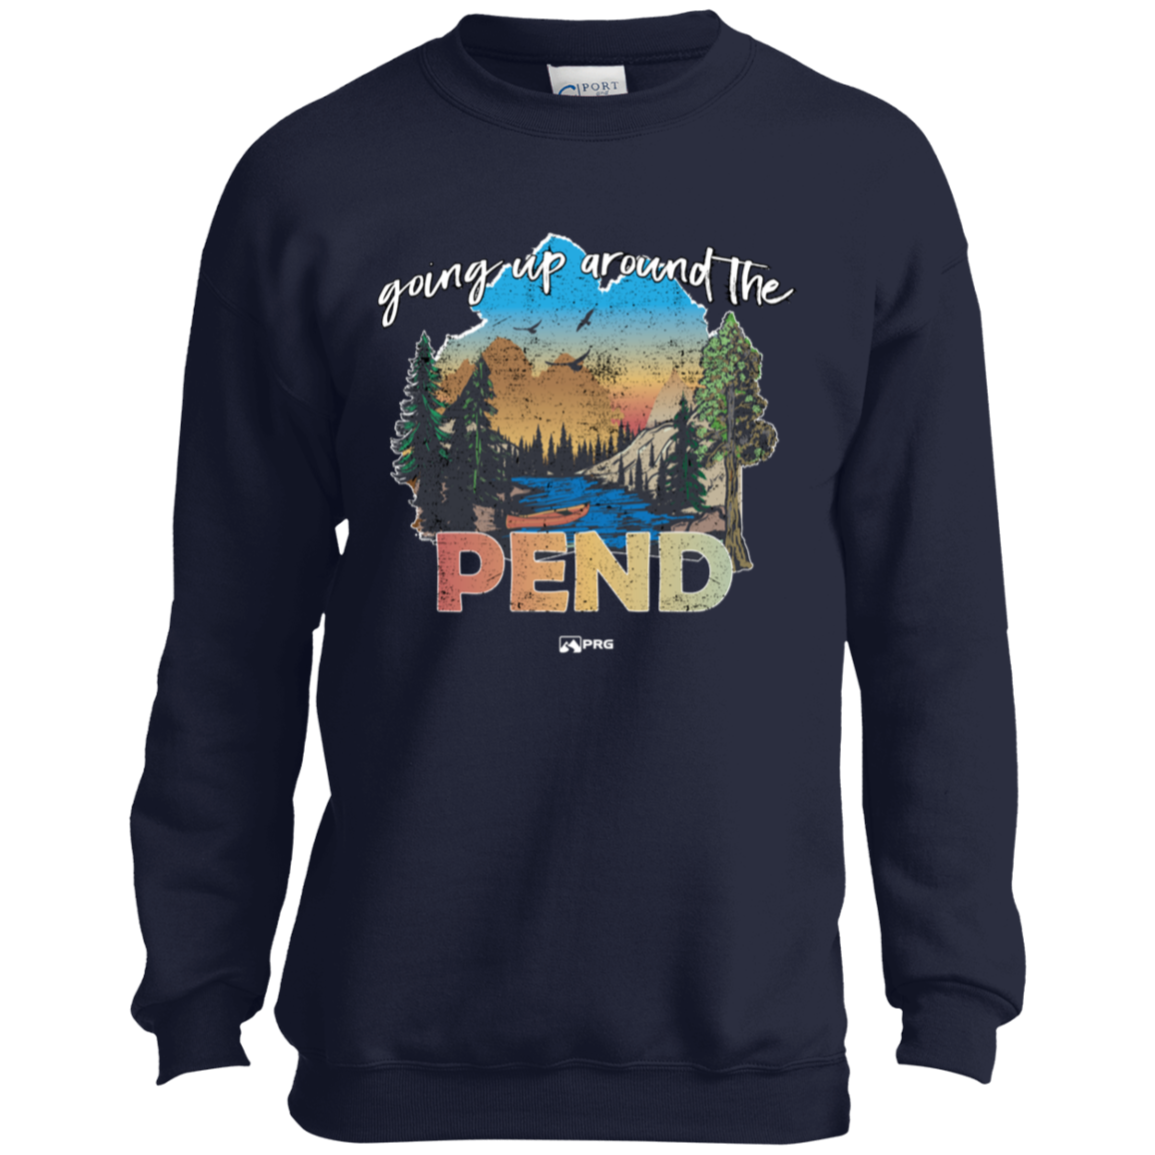 Around the Pend - Youth Sweatshirt